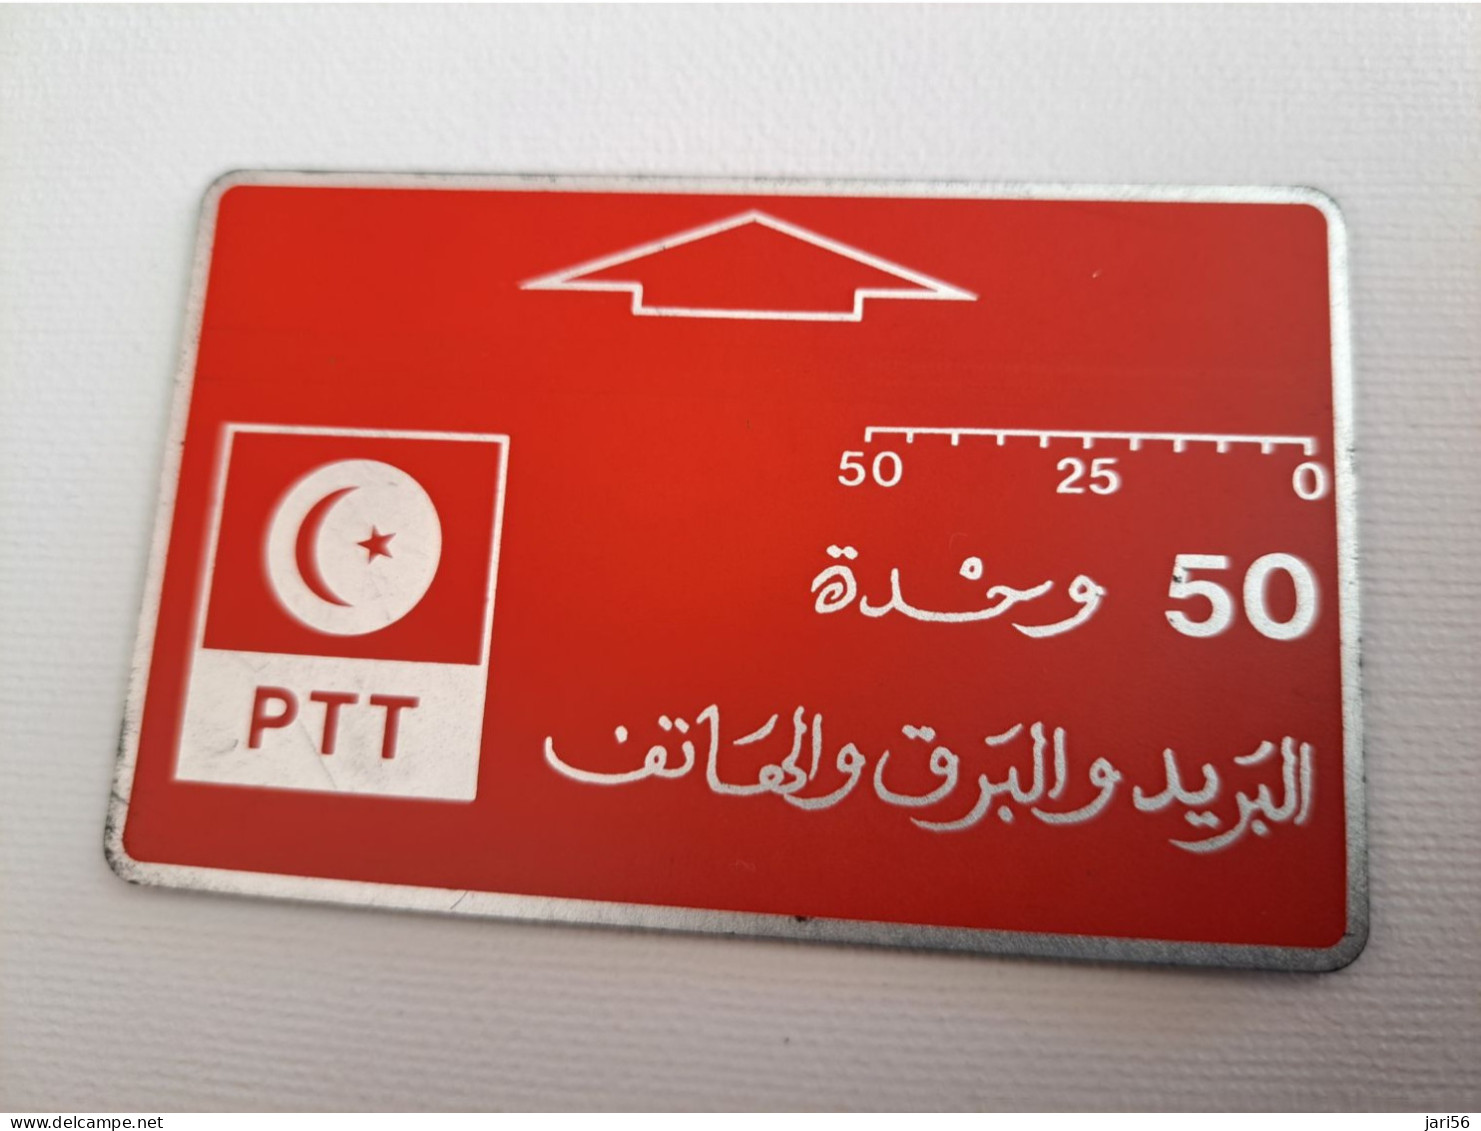 TUNESIA   L&G CARD 50 UNITS /NO NOTCH/ FIRST ISSUE / T10G /     MINT CARD     ** 13518** - Tunesien